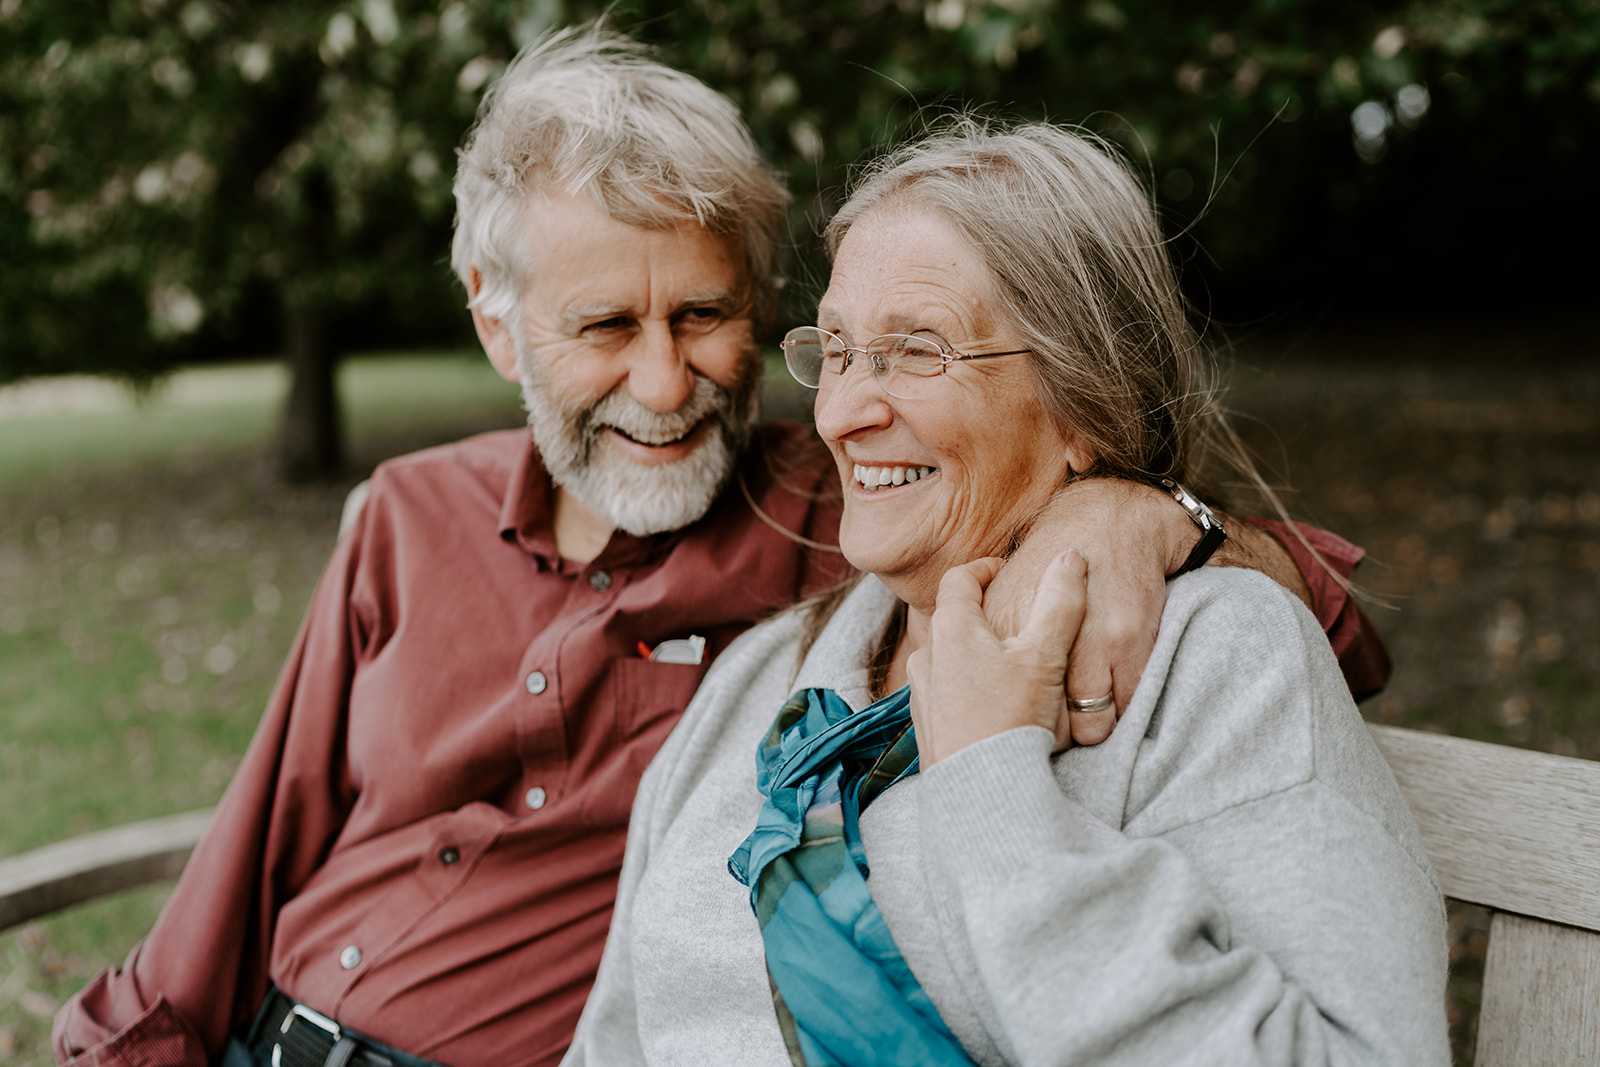 grandparents celebrate their love at Rutland Water 